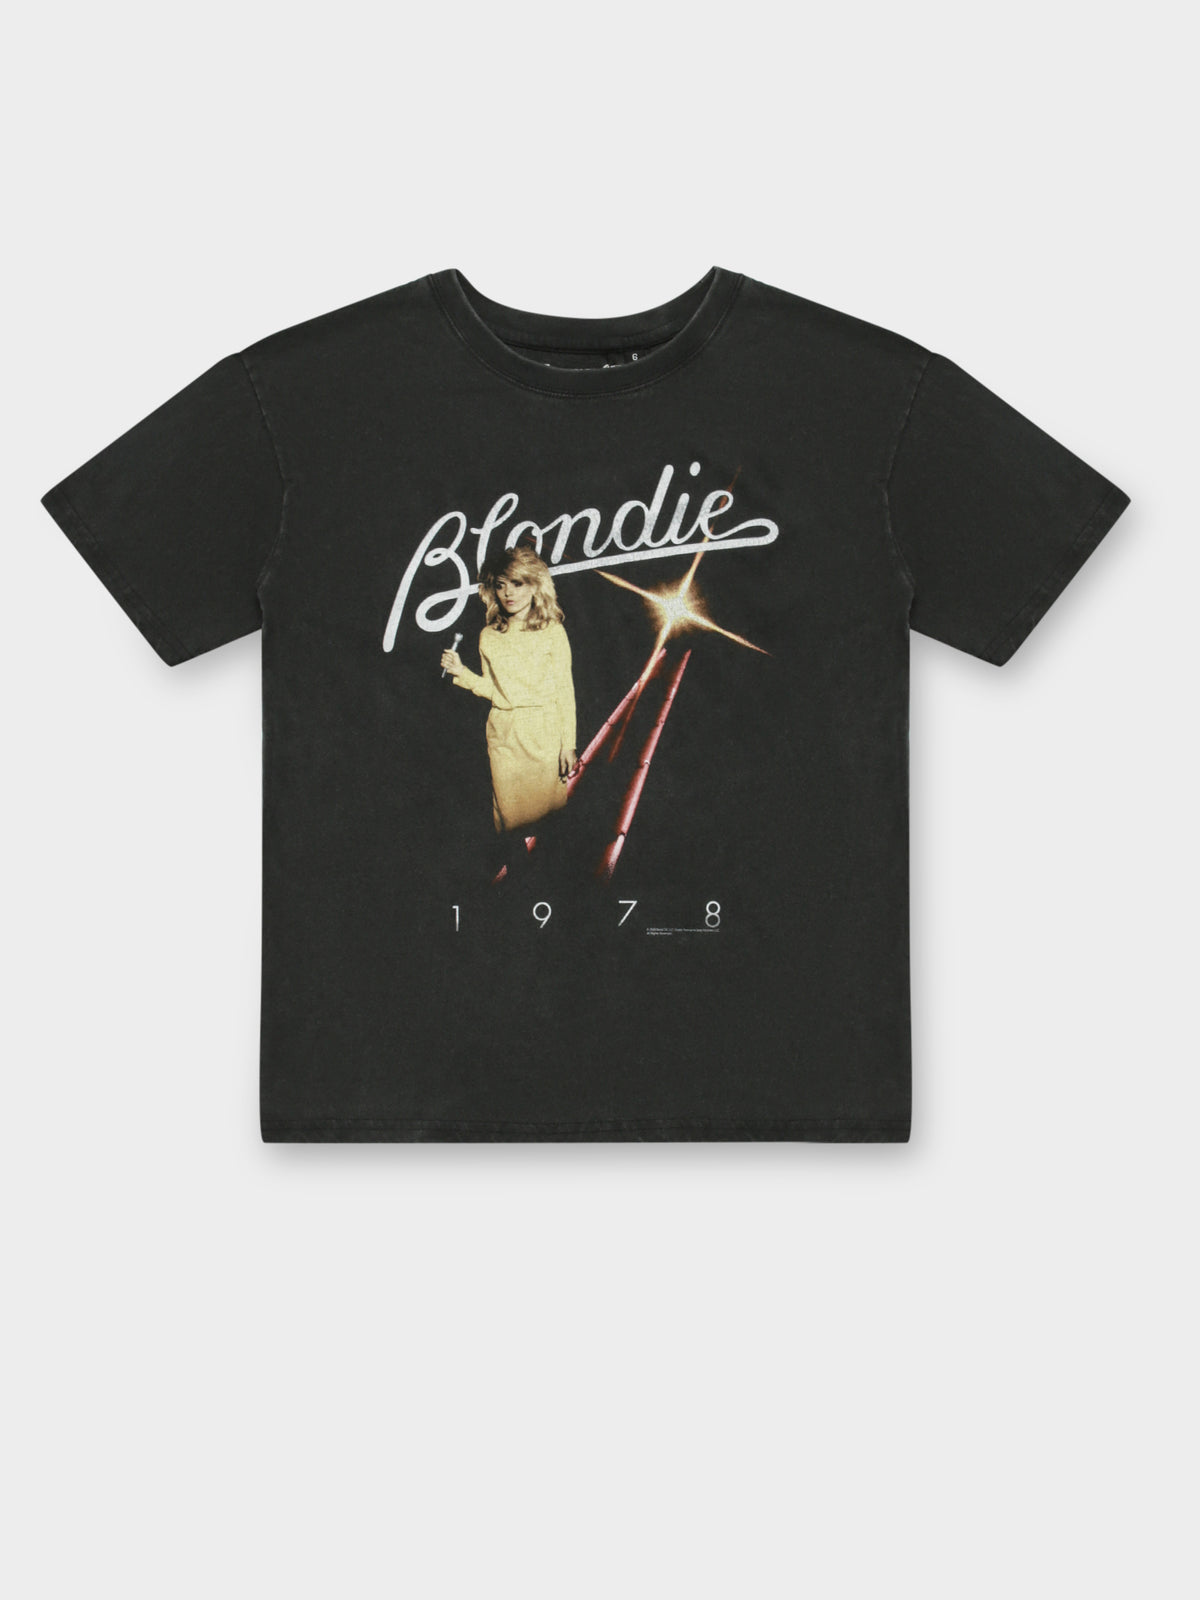 Blondie T-Shirt in Washed Black